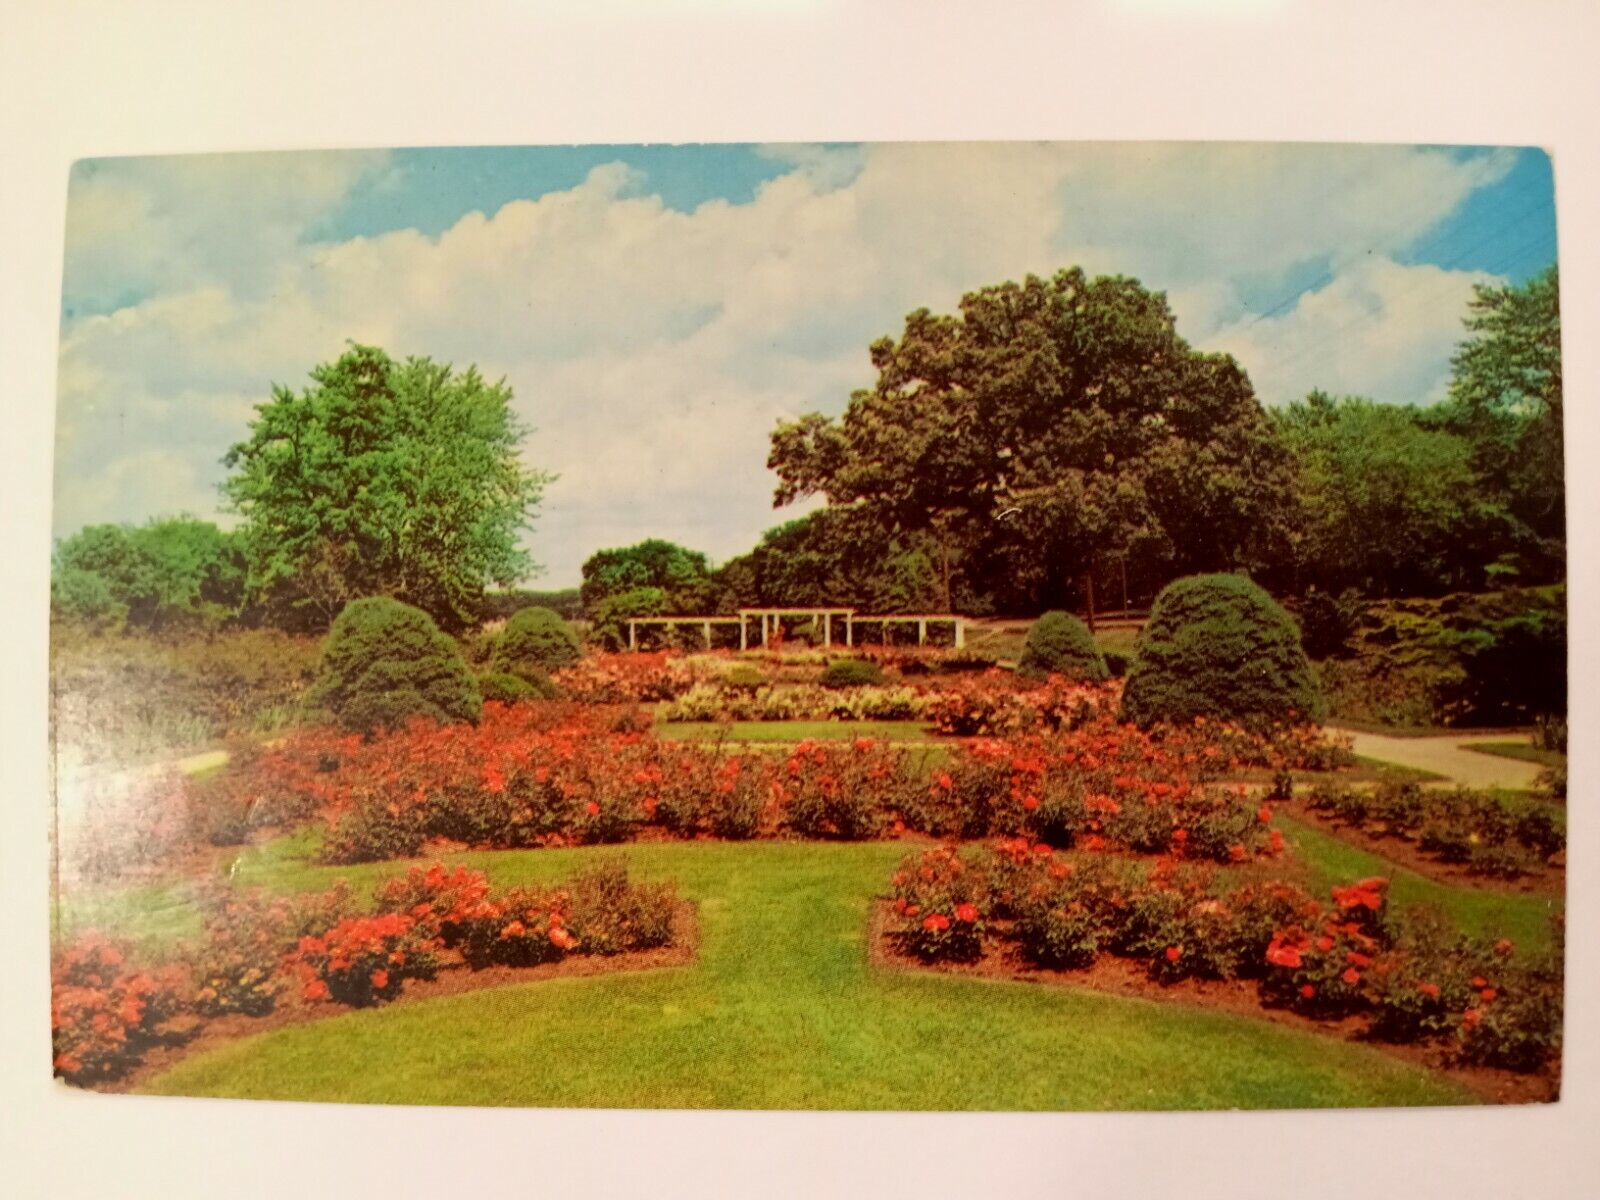 Flower Beds, Sinnissippi Park, Rockford, IL, vintage 1940s 1950s postcard unsent